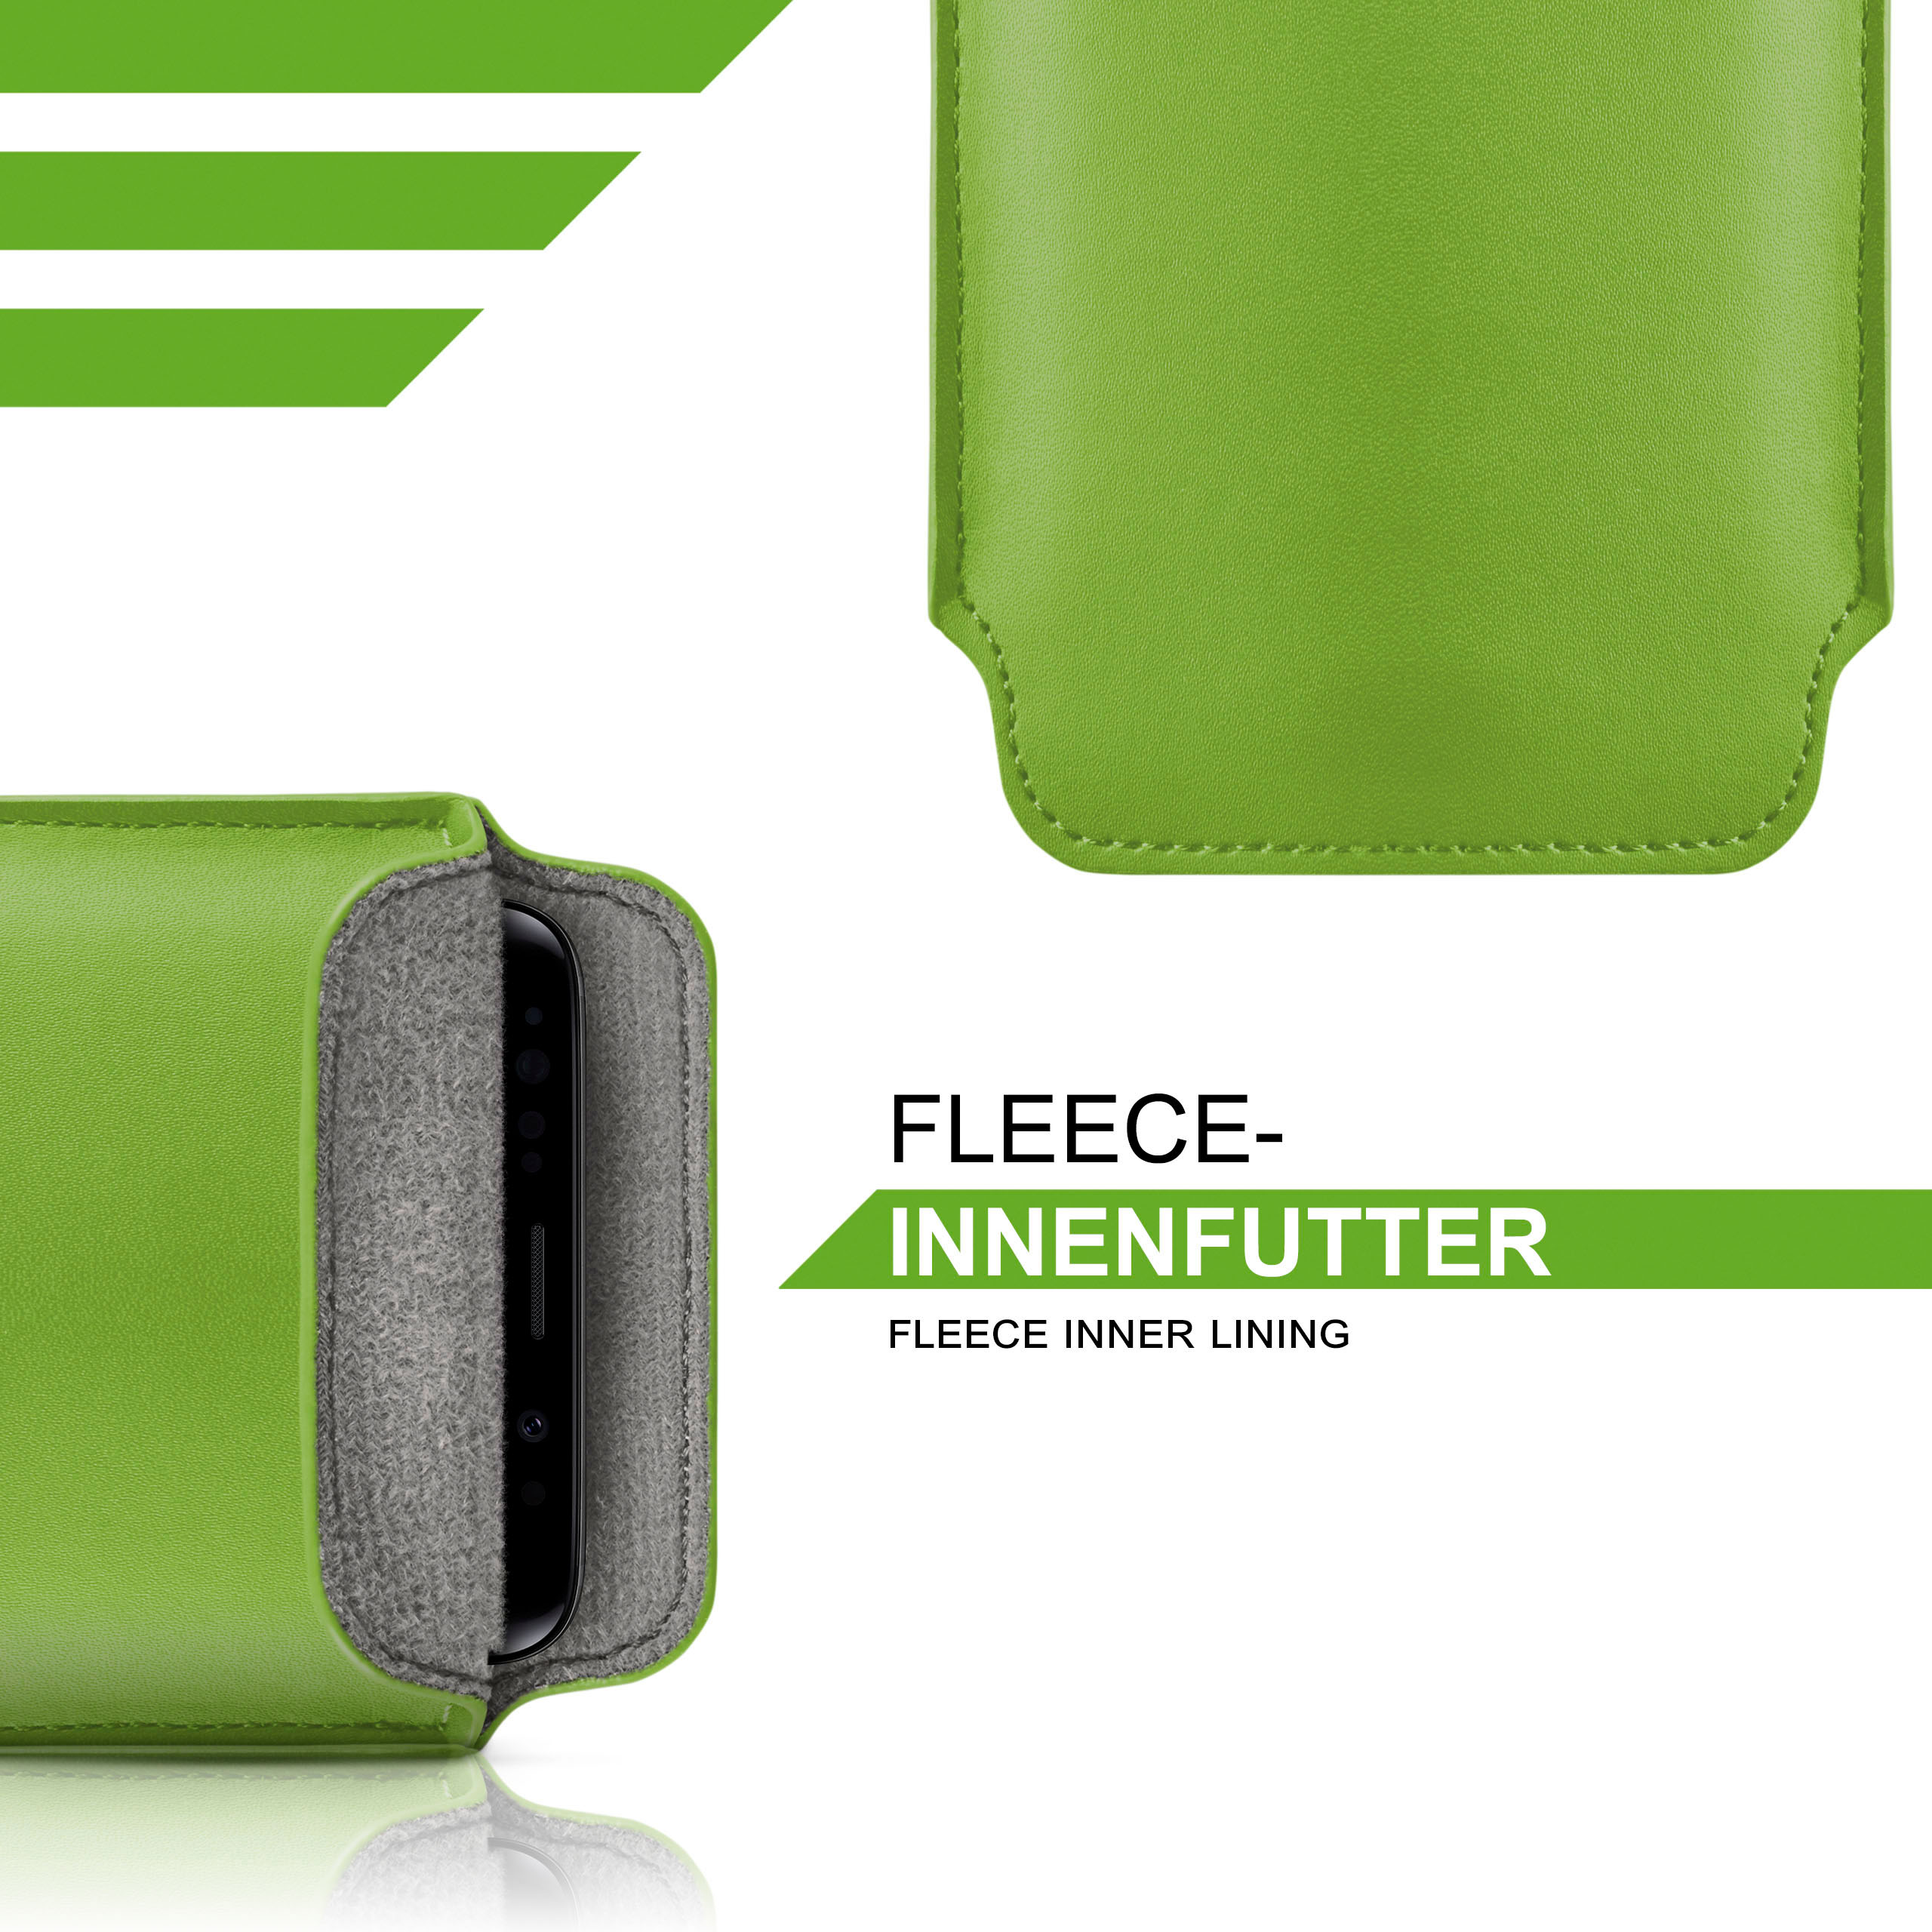 MOEX Slide Case, Full Cover, Blade L110, ZTE, Lime-Green